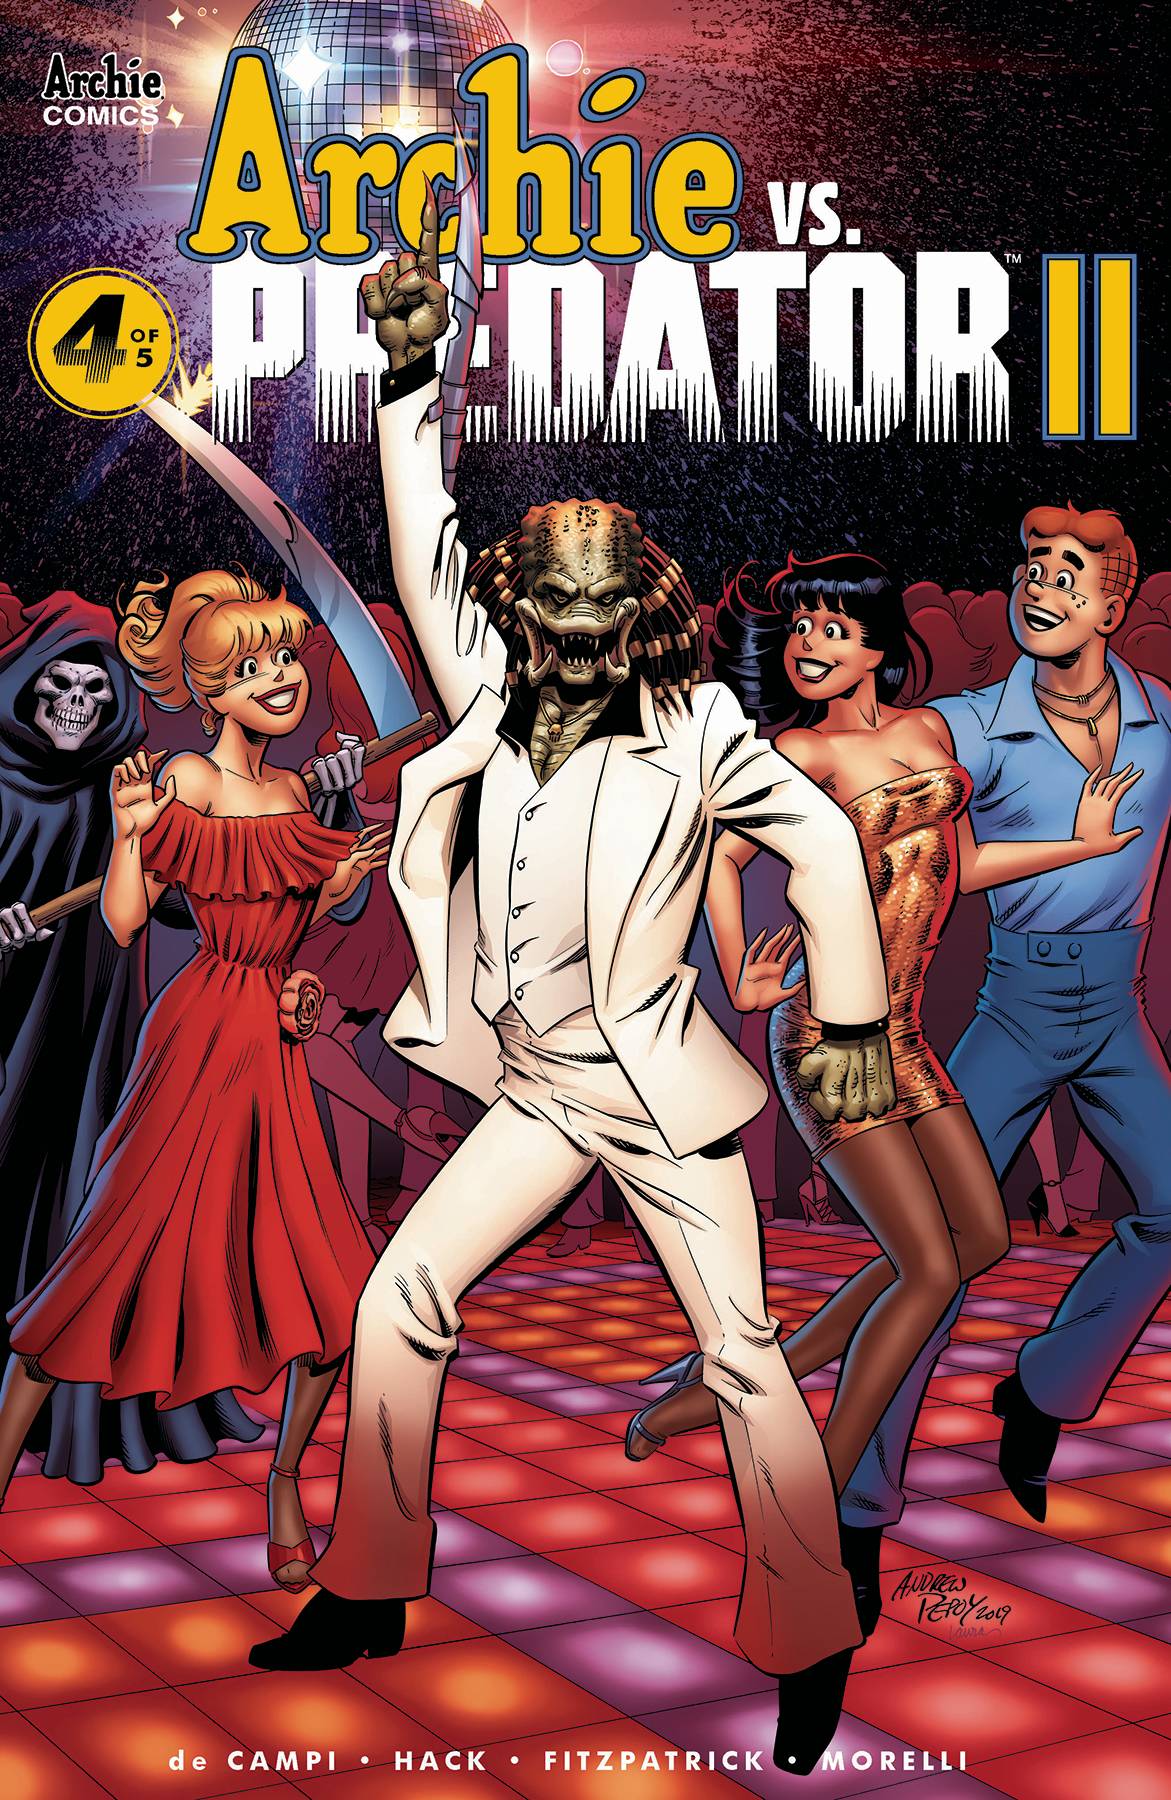 Archie Vs Predator 2 #4 Cover F Pepoy (Of 5)